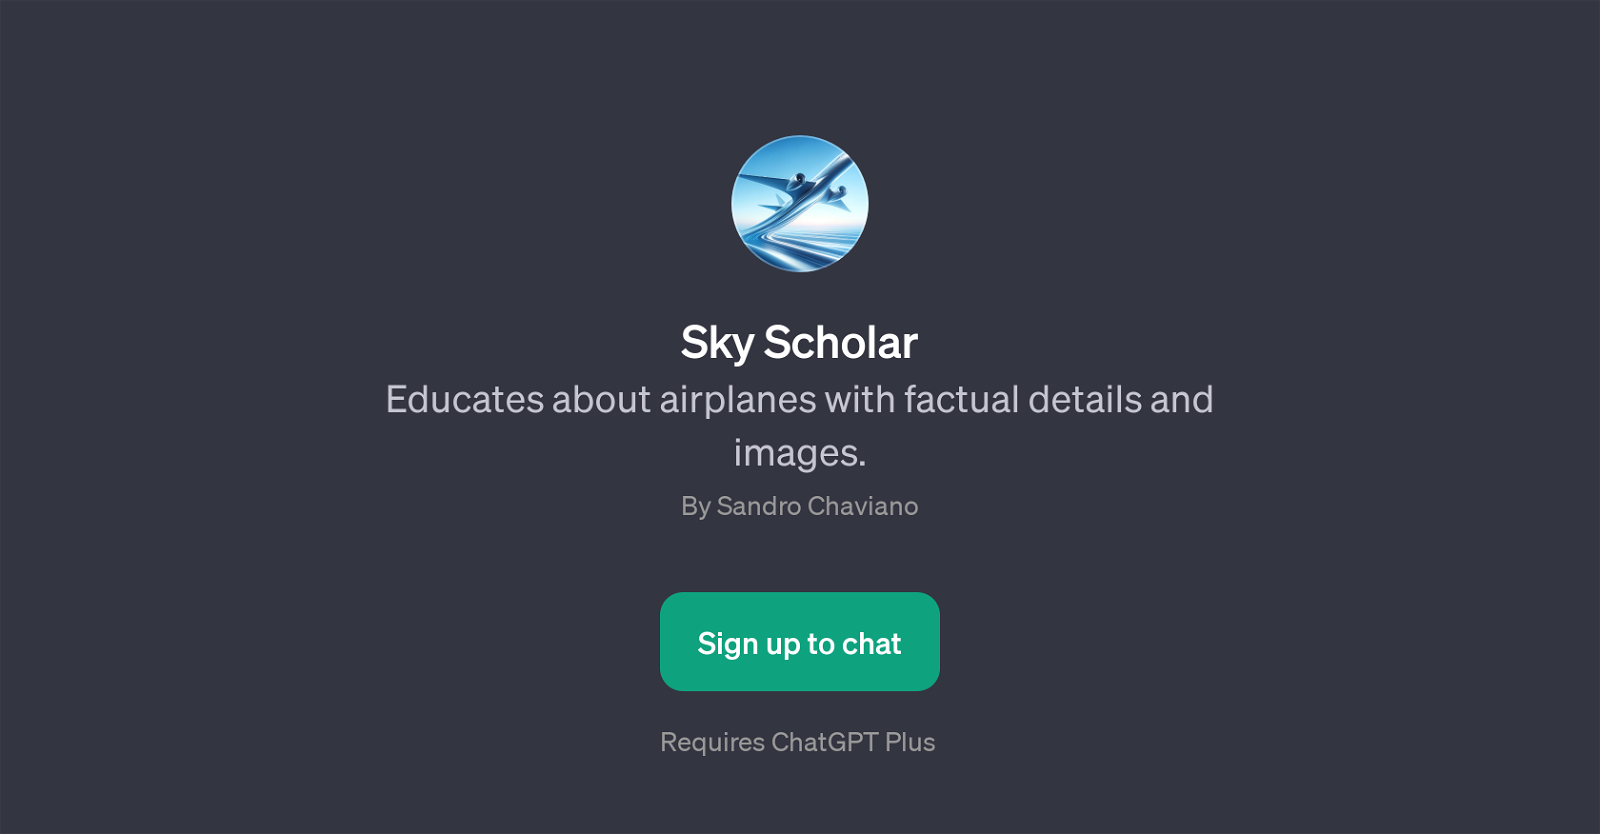 Sky Scholar website